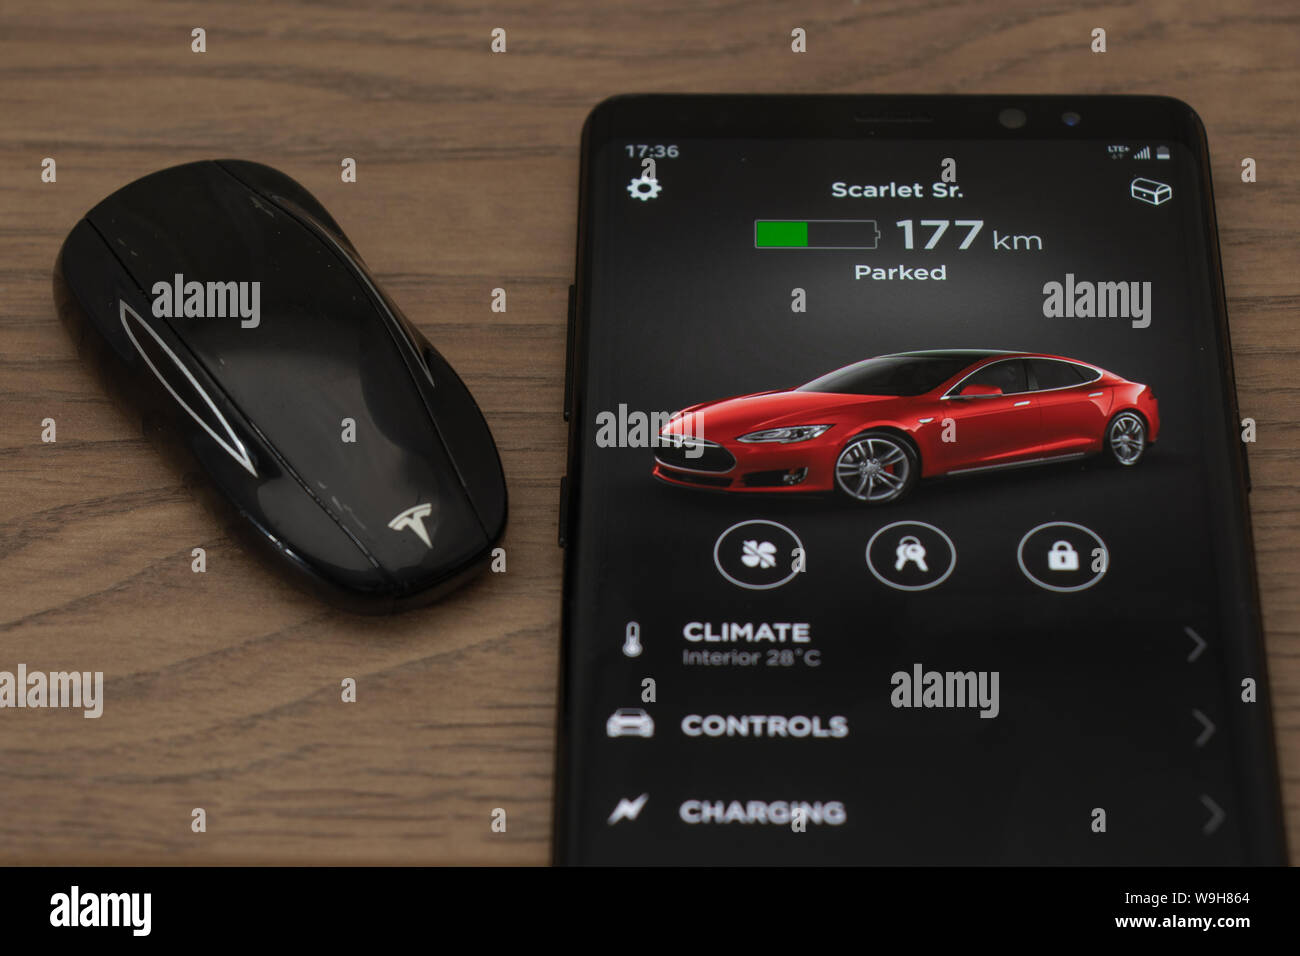 Tesla Model S key fob and Tesla car control app home screen on a smartphone. Stock Photo